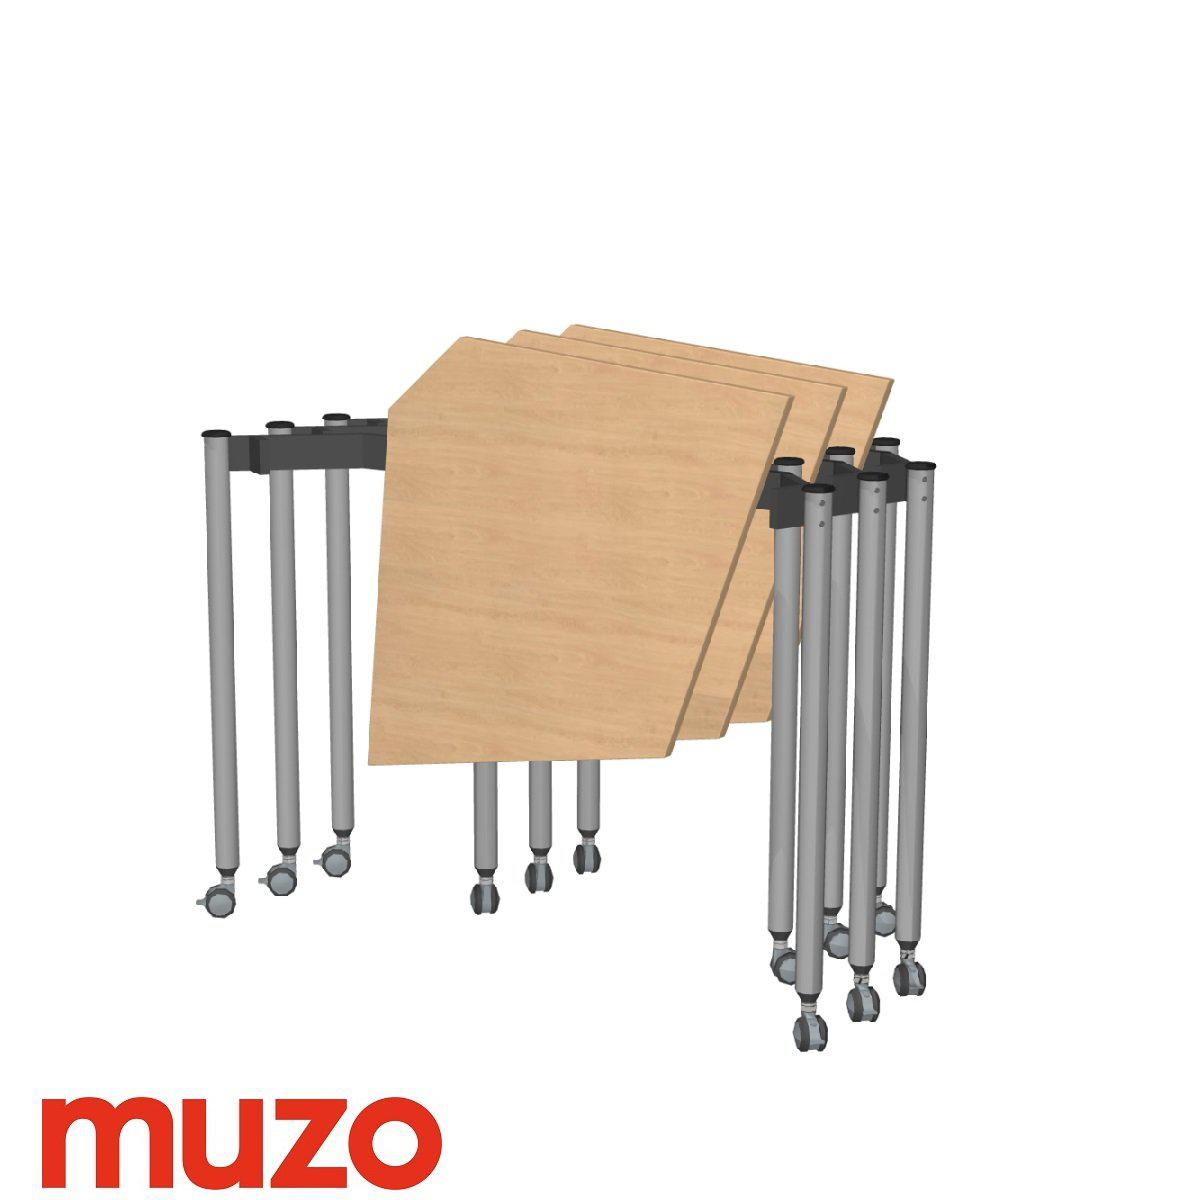 Muzo Tall Kite® Standing Height Mobile Flip-Top Folding/Nesting Table, Kite Shape, 29.5" W x 29.5" D